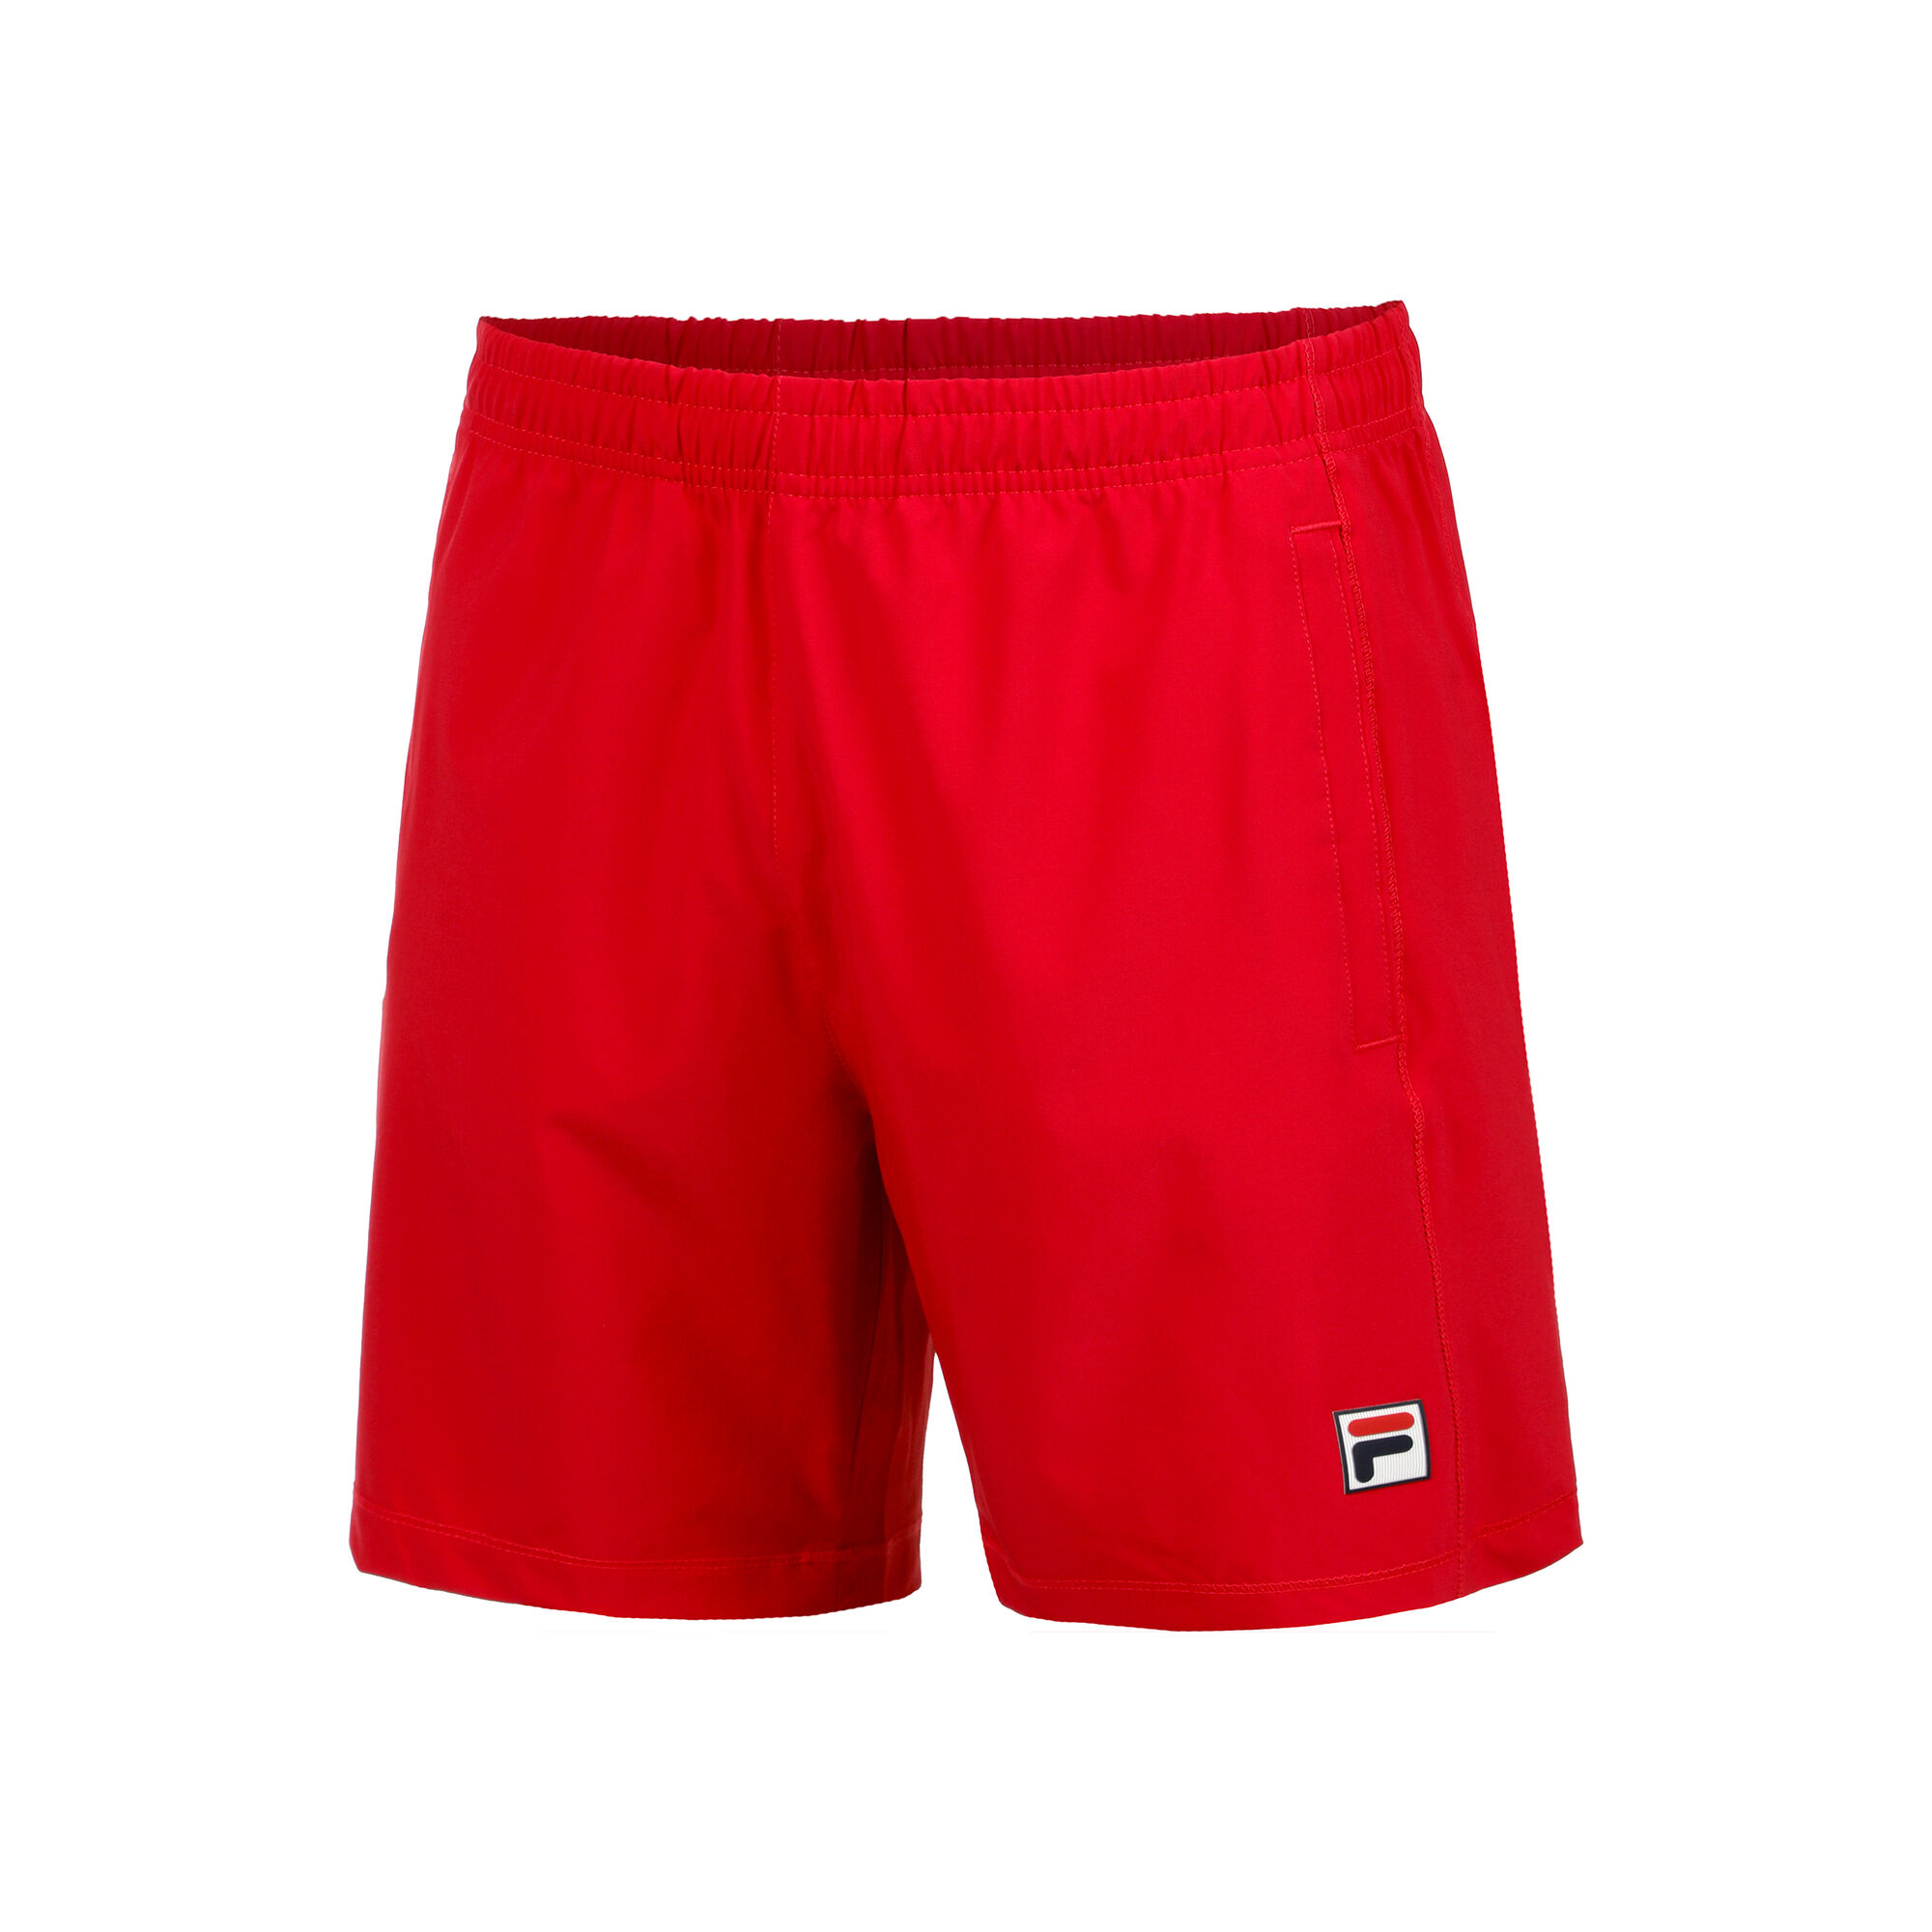 Buy Fila Kian Shorts Men Red online